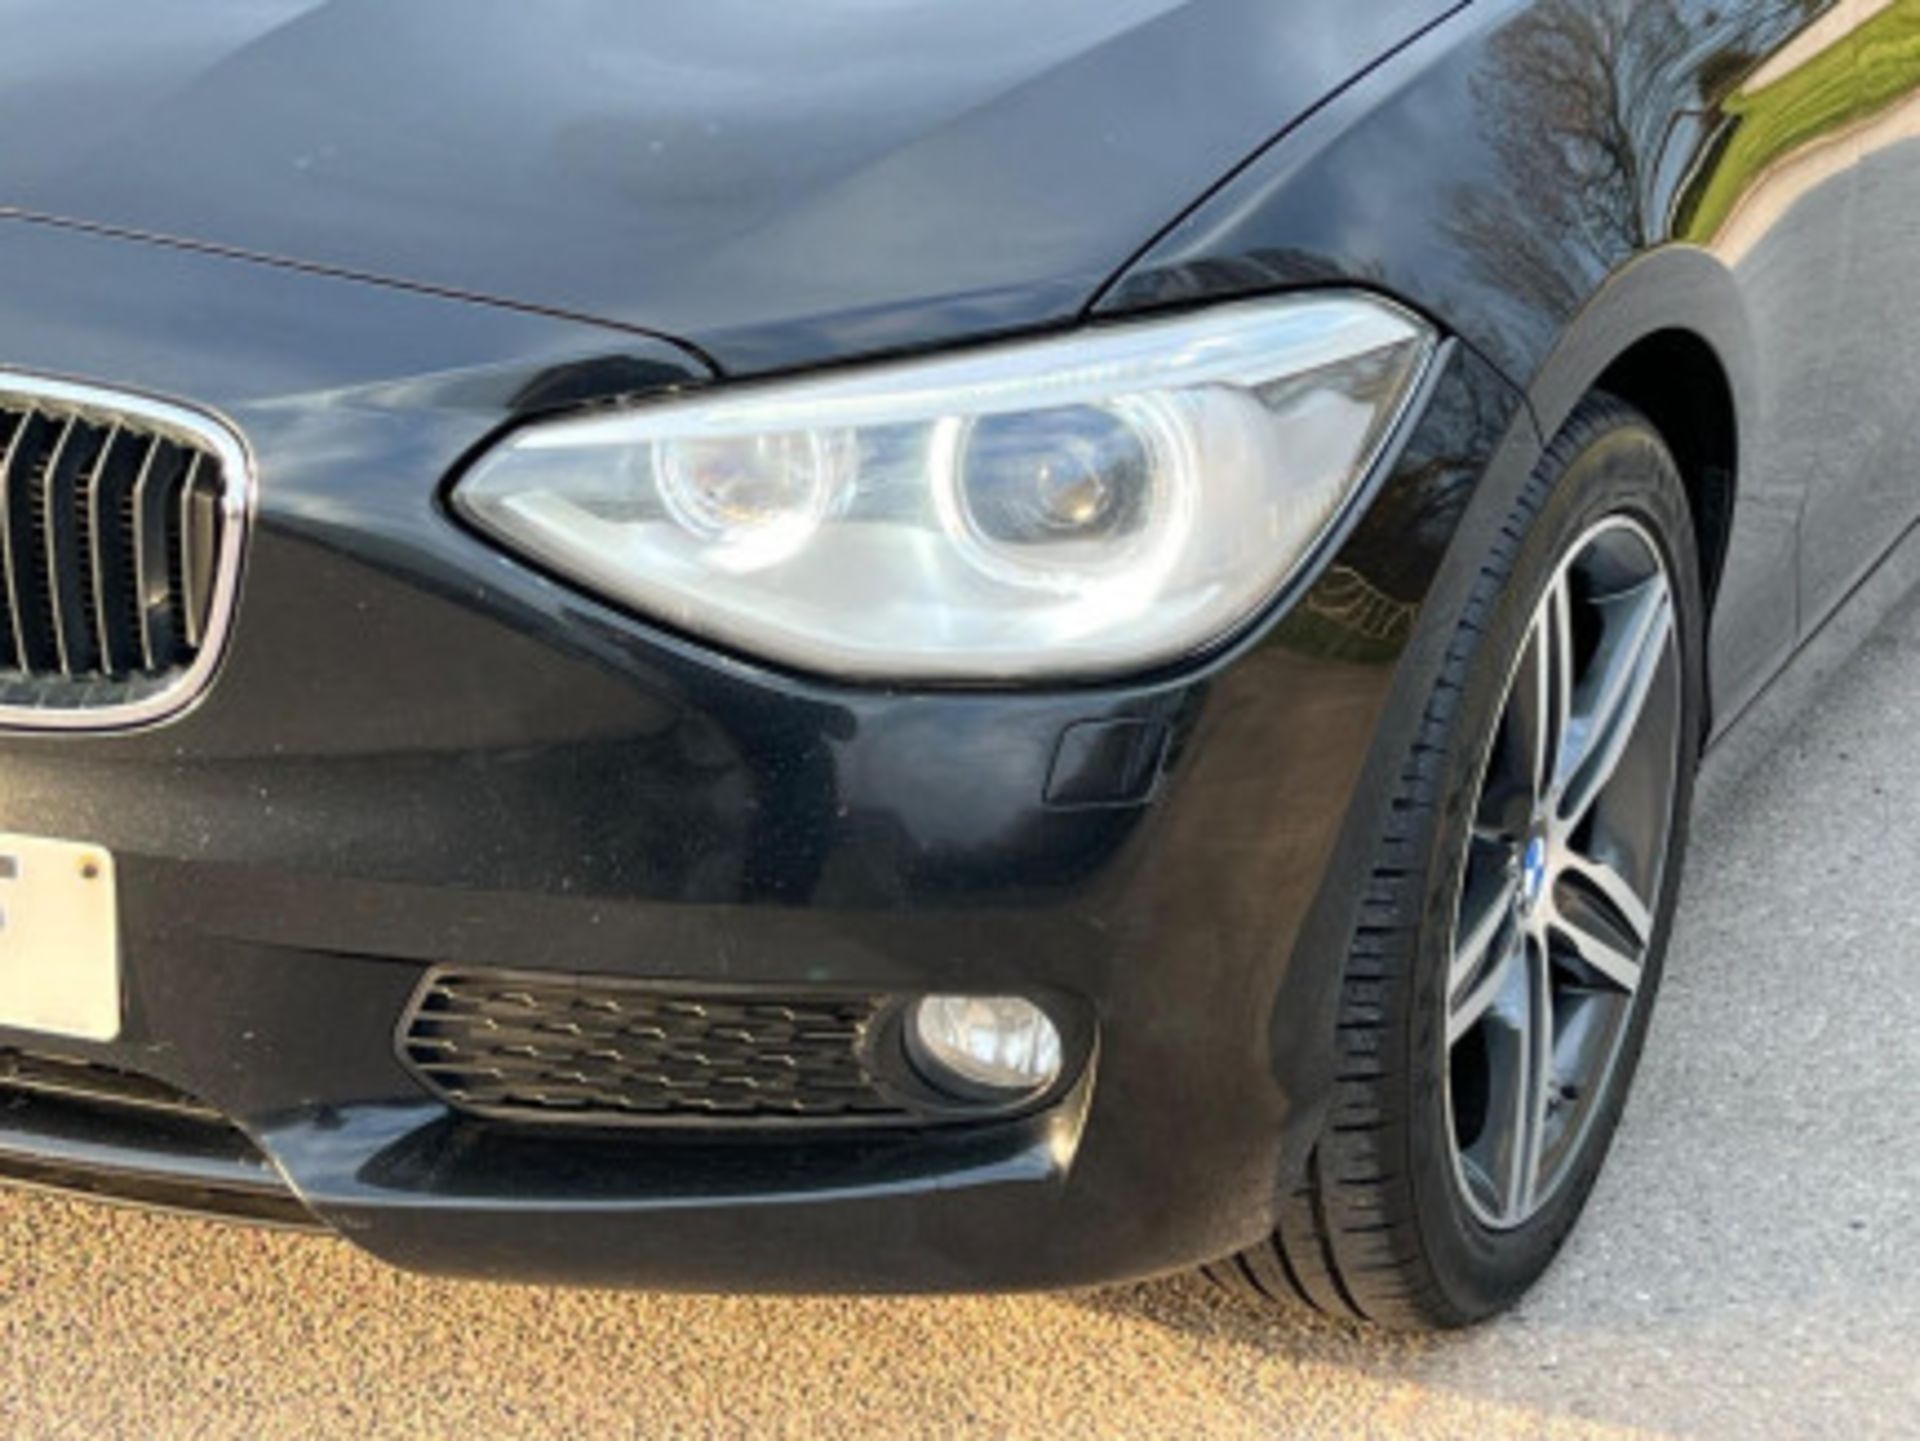 2014 BMW 1 SERIES 1.6 116D ED EFFICIENT DYNAMICS BUSINESS 5DR >>--NO VAT ON HAMMER--<< - Image 39 of 119